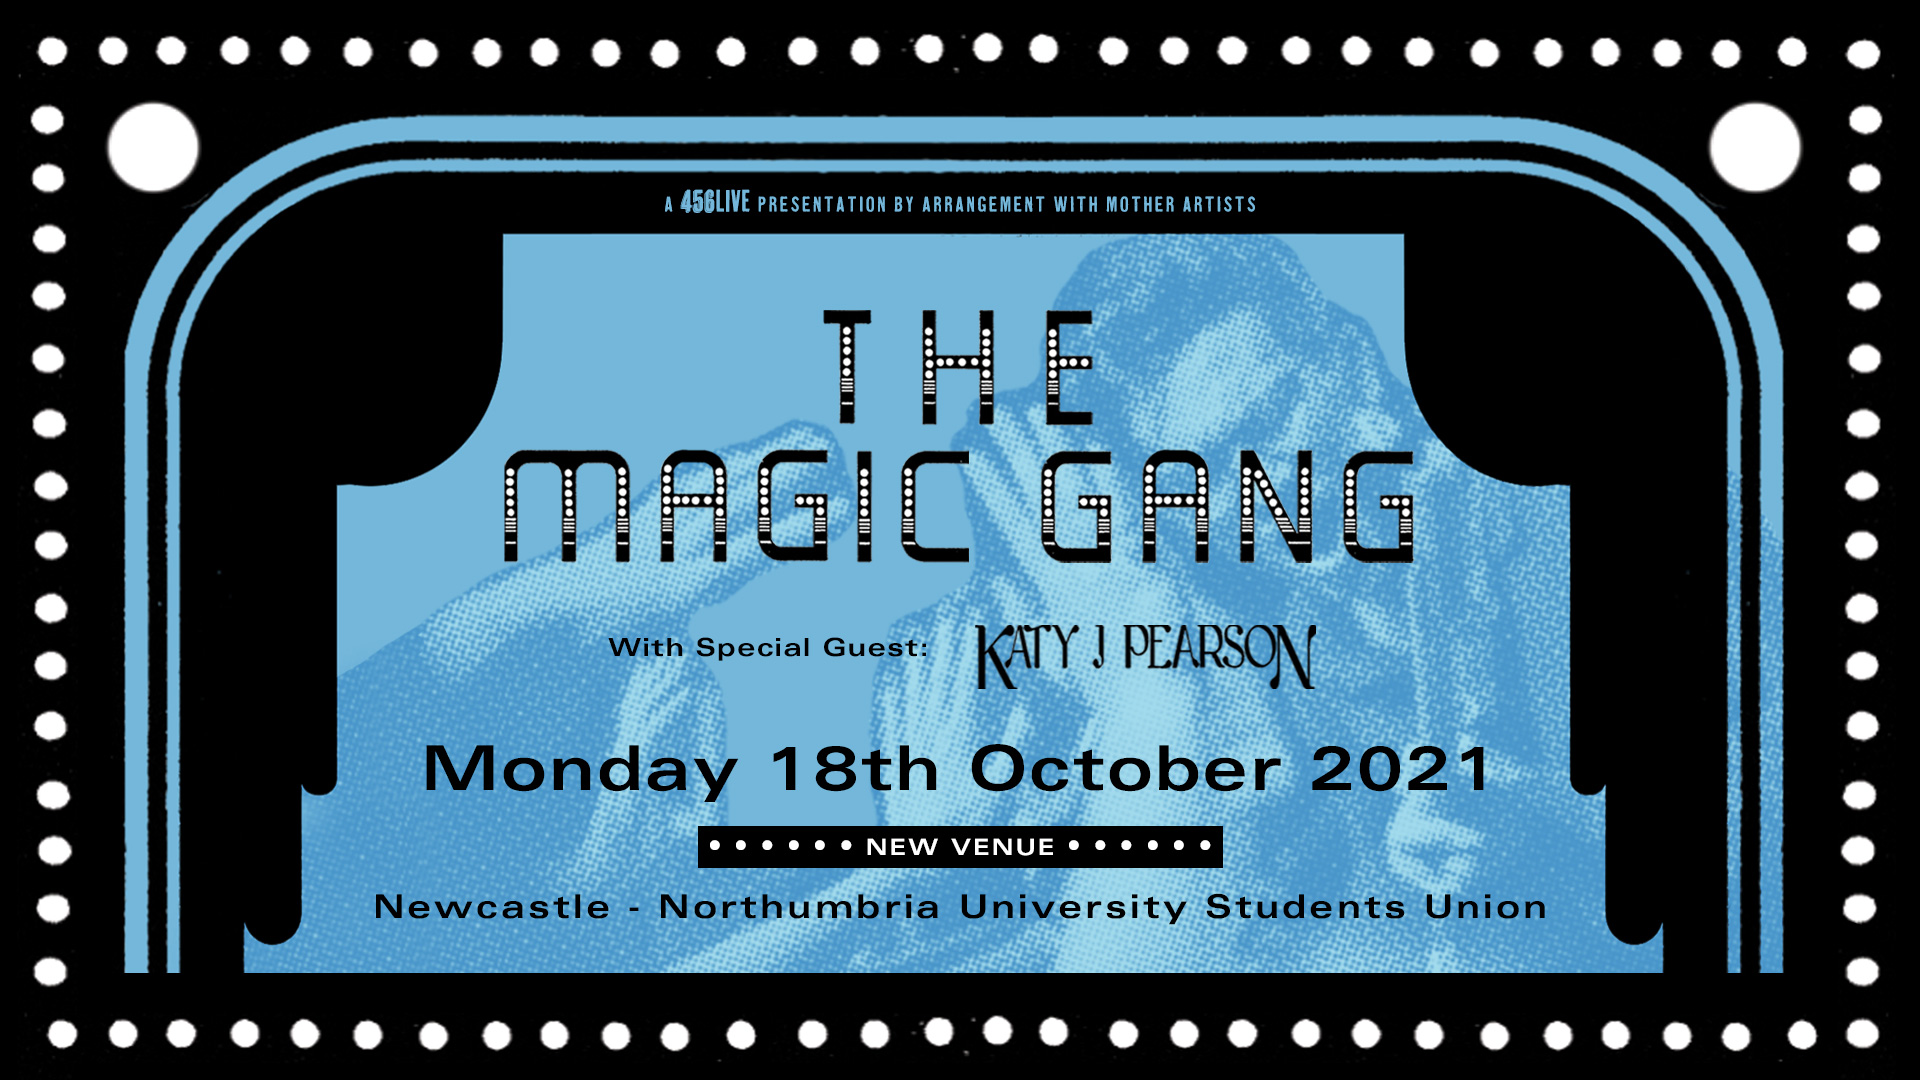 The Magic Gang